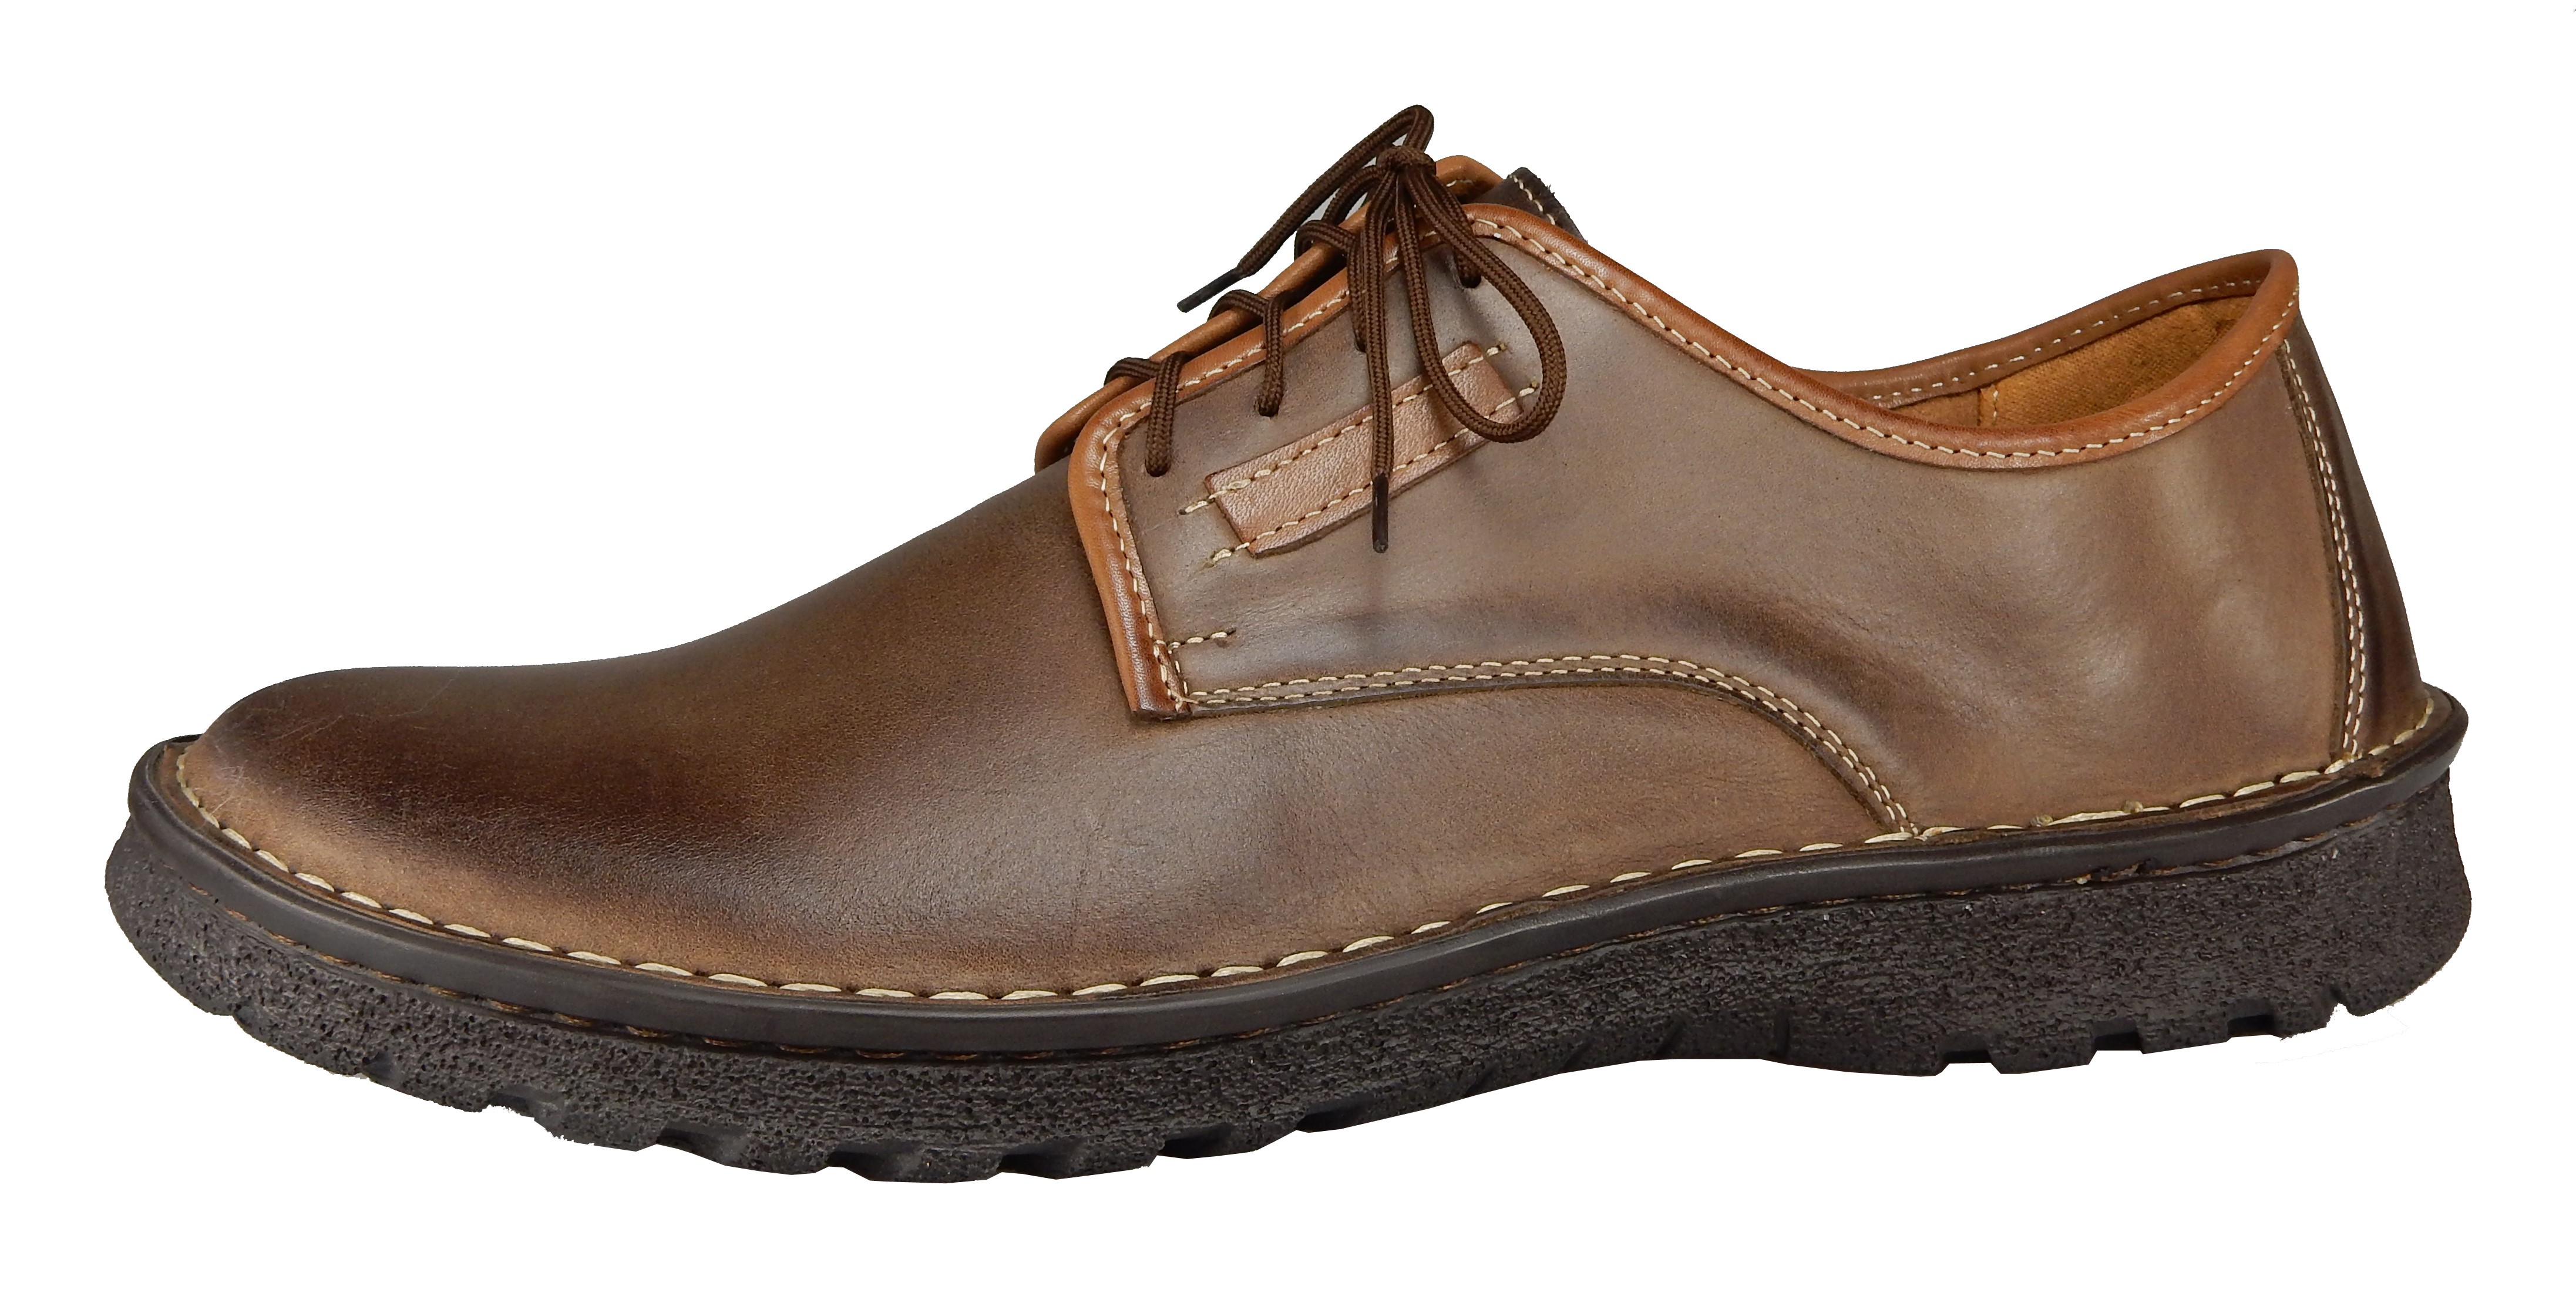 * Pánské hnědé kožené, zdravotně tvarované široké boty ORTO PLUS D00400 - 11 Tabulka pánských velikostí: 41